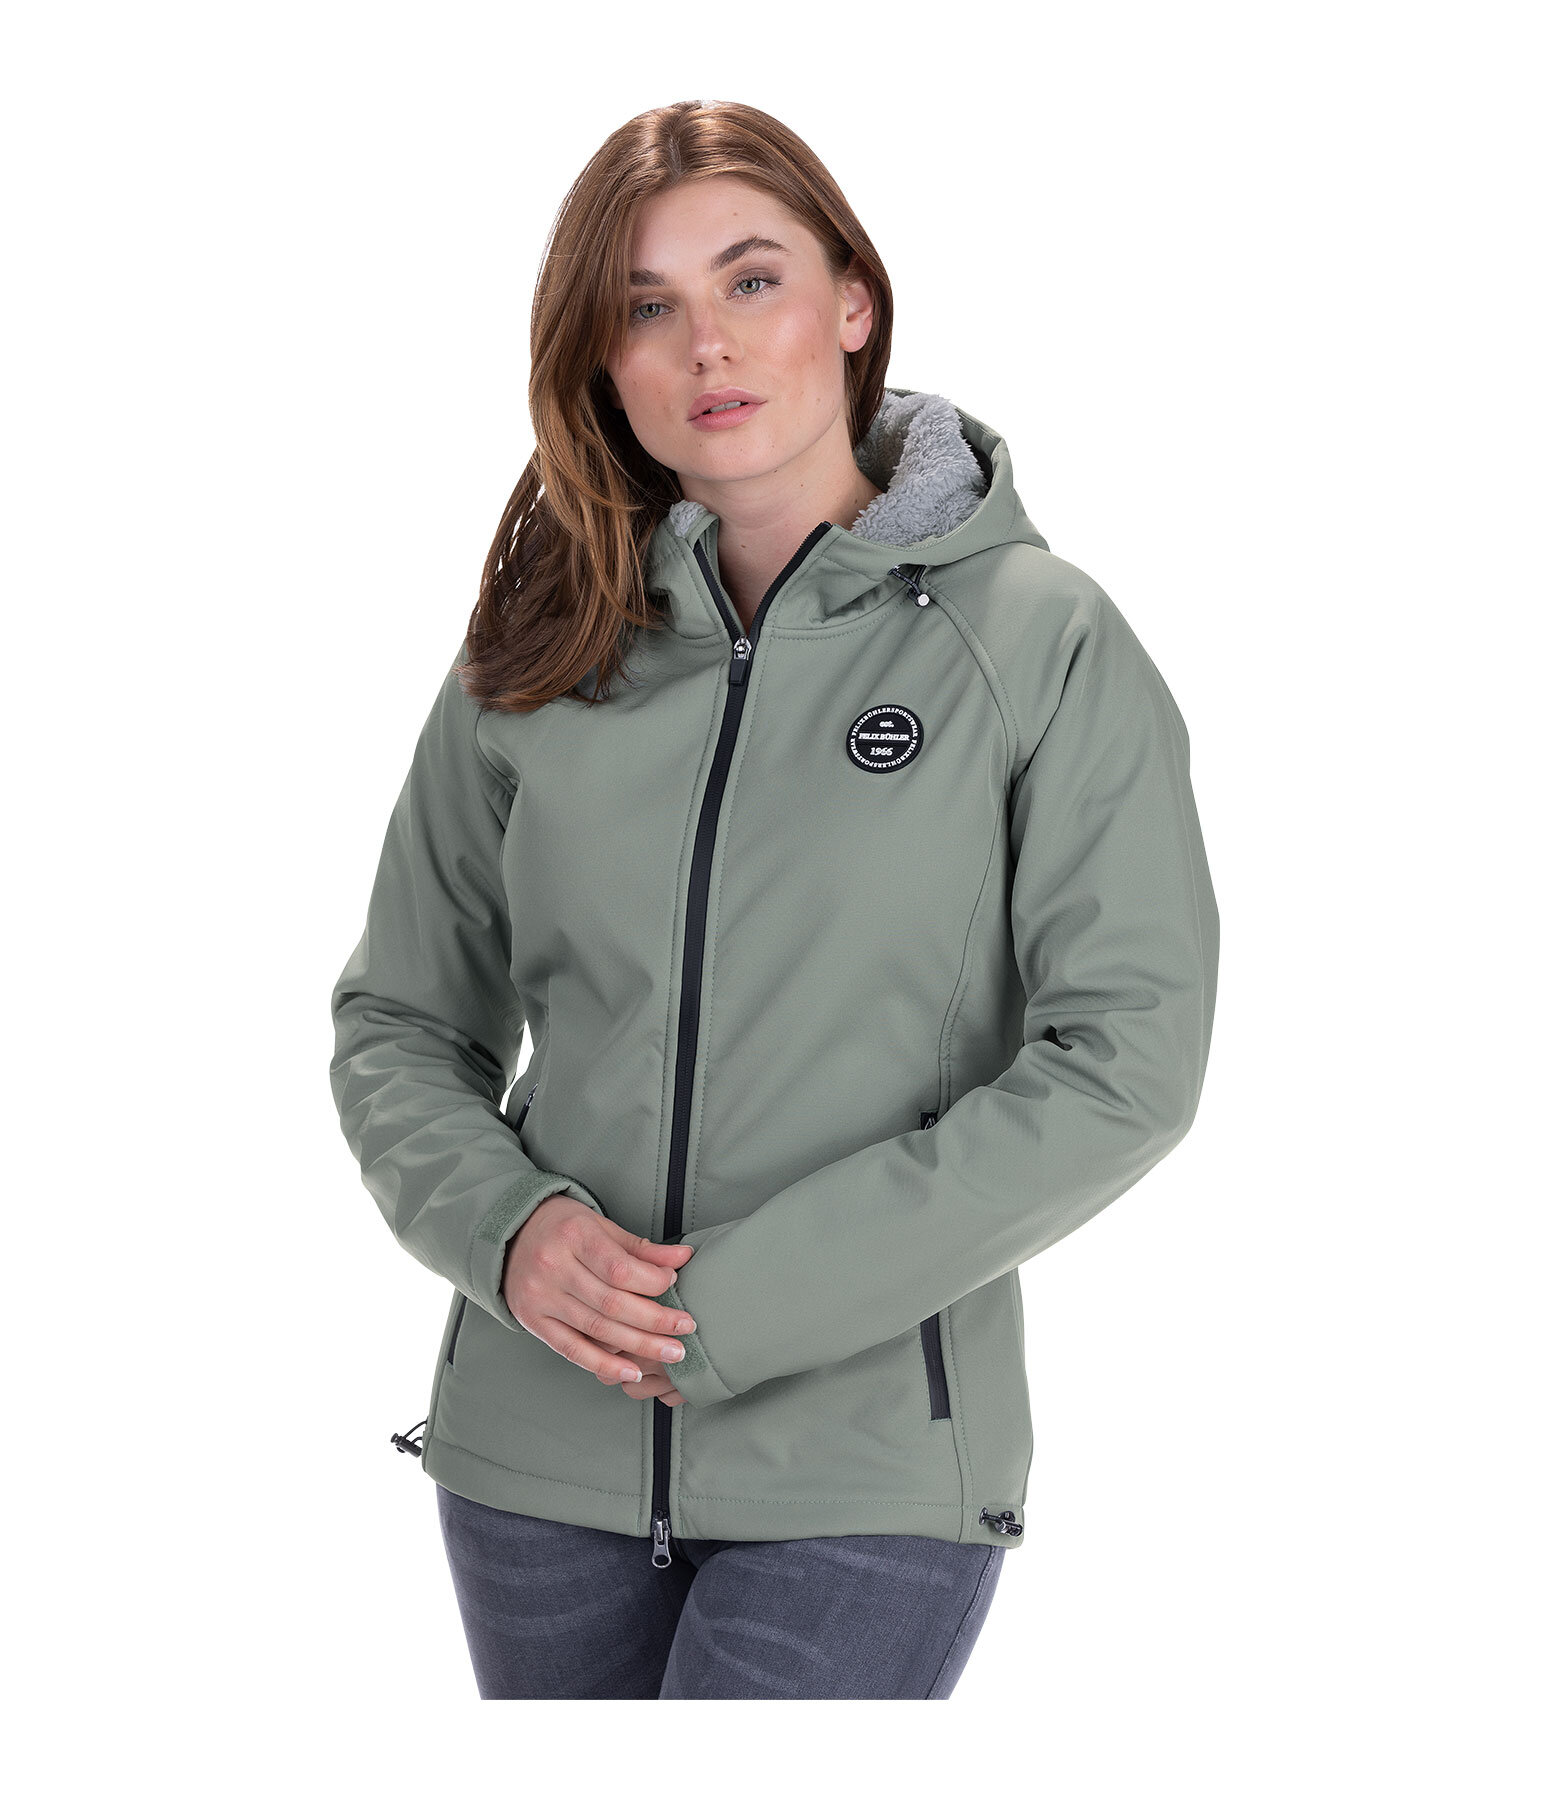 HOOEY Women’s Full-Zip Fleece Lined All-Weather Protection Softshell Jacket 